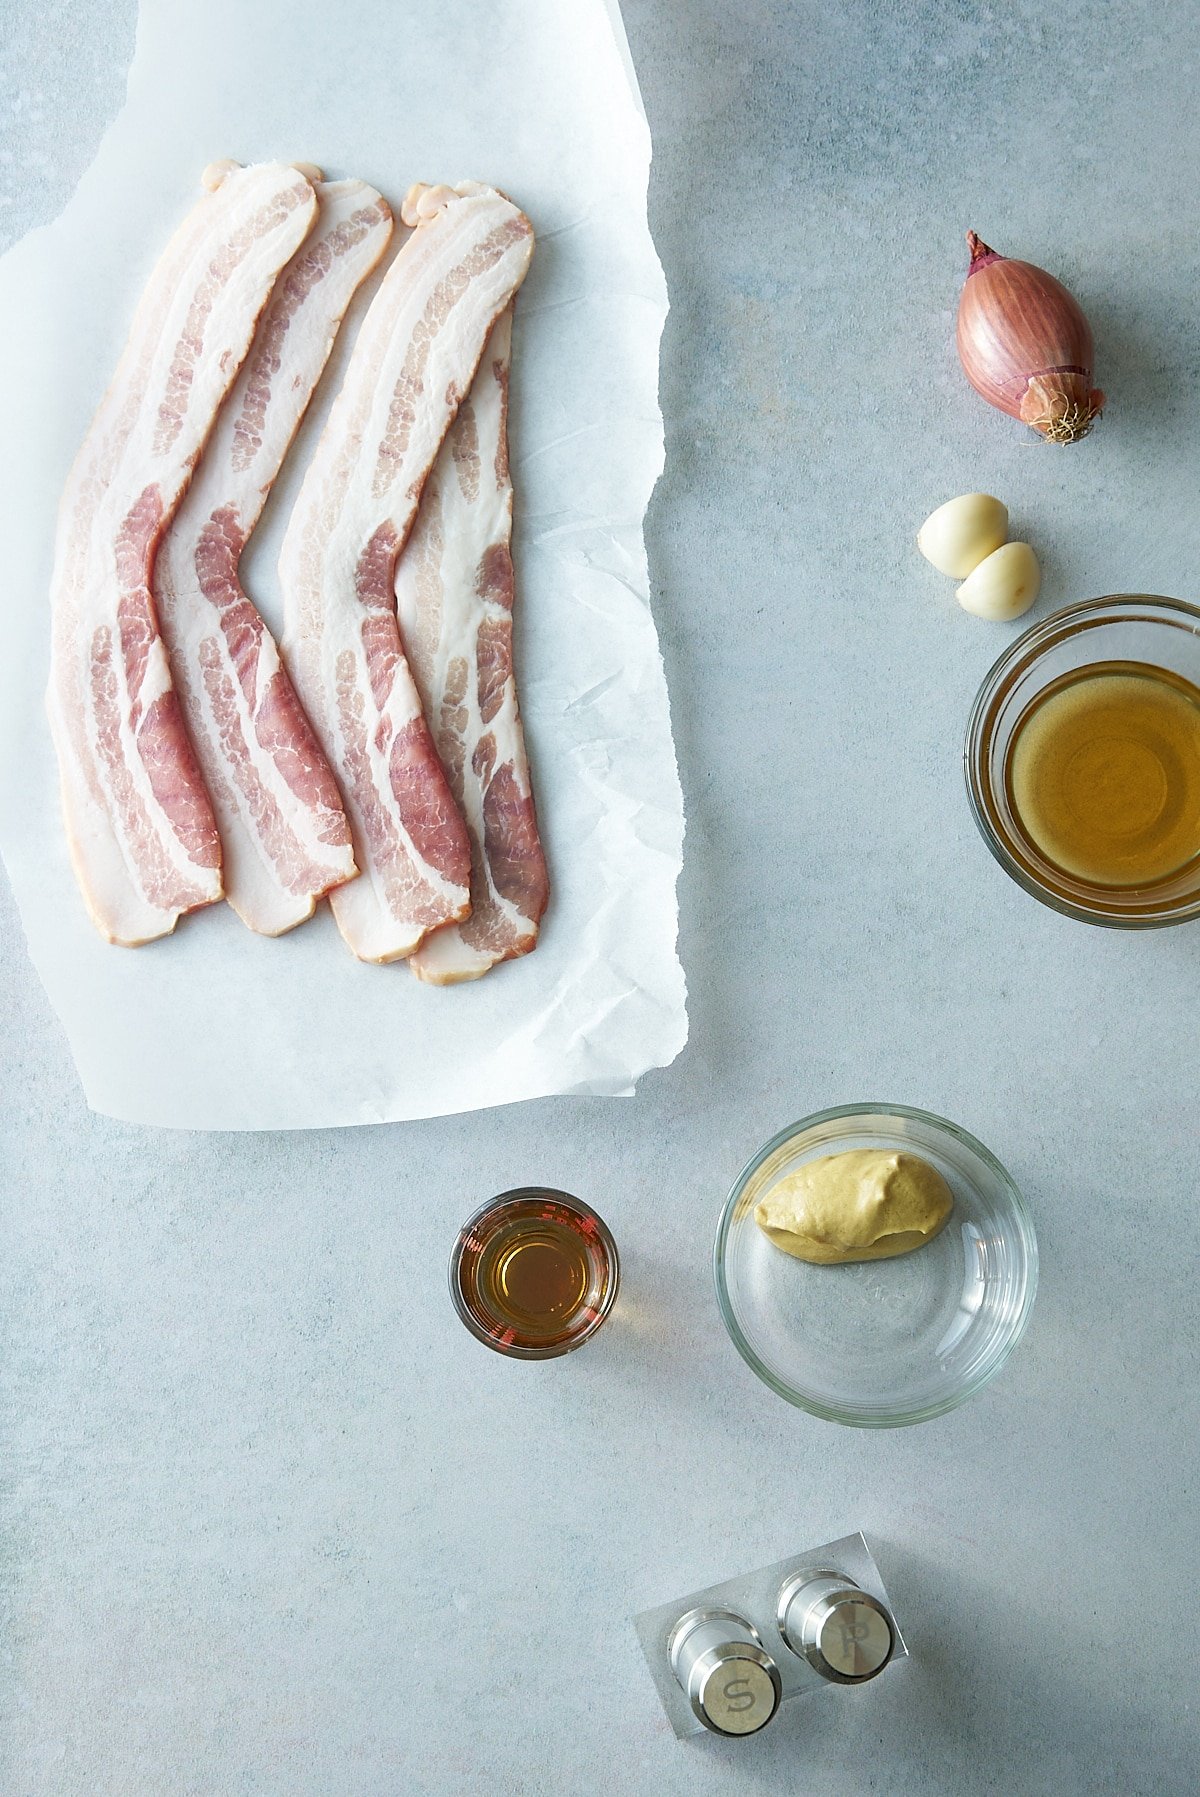 Bacon vinaigrette recipe ingredients.